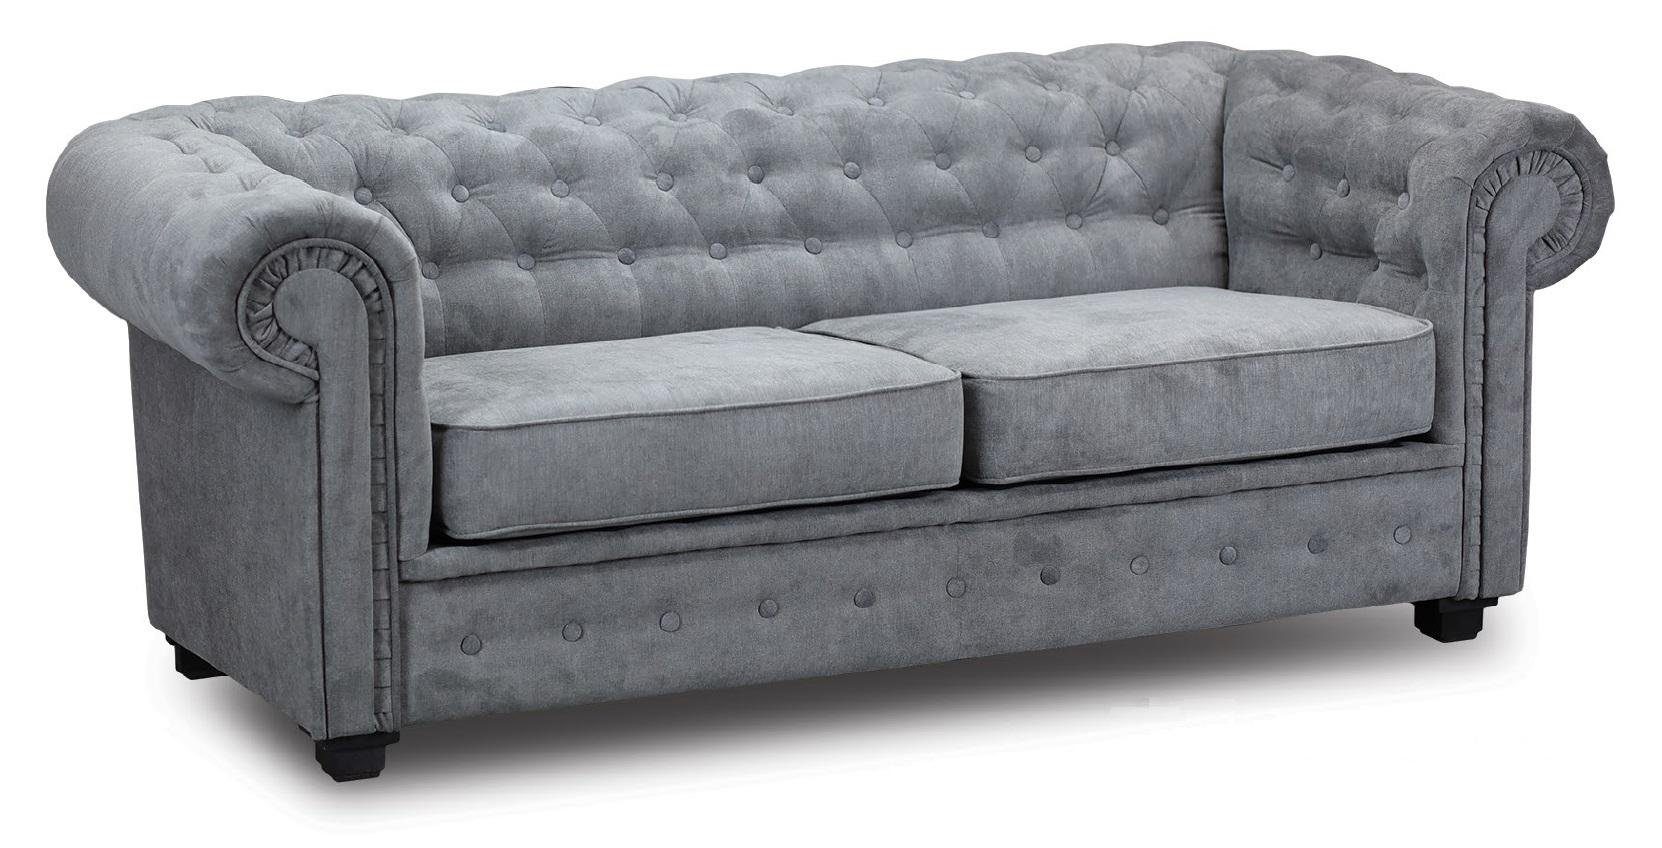 JVmoebel Sofa Graue Chesterfield Couch Polster Möbel Zweisitzer Couch Neu, Made in Europe